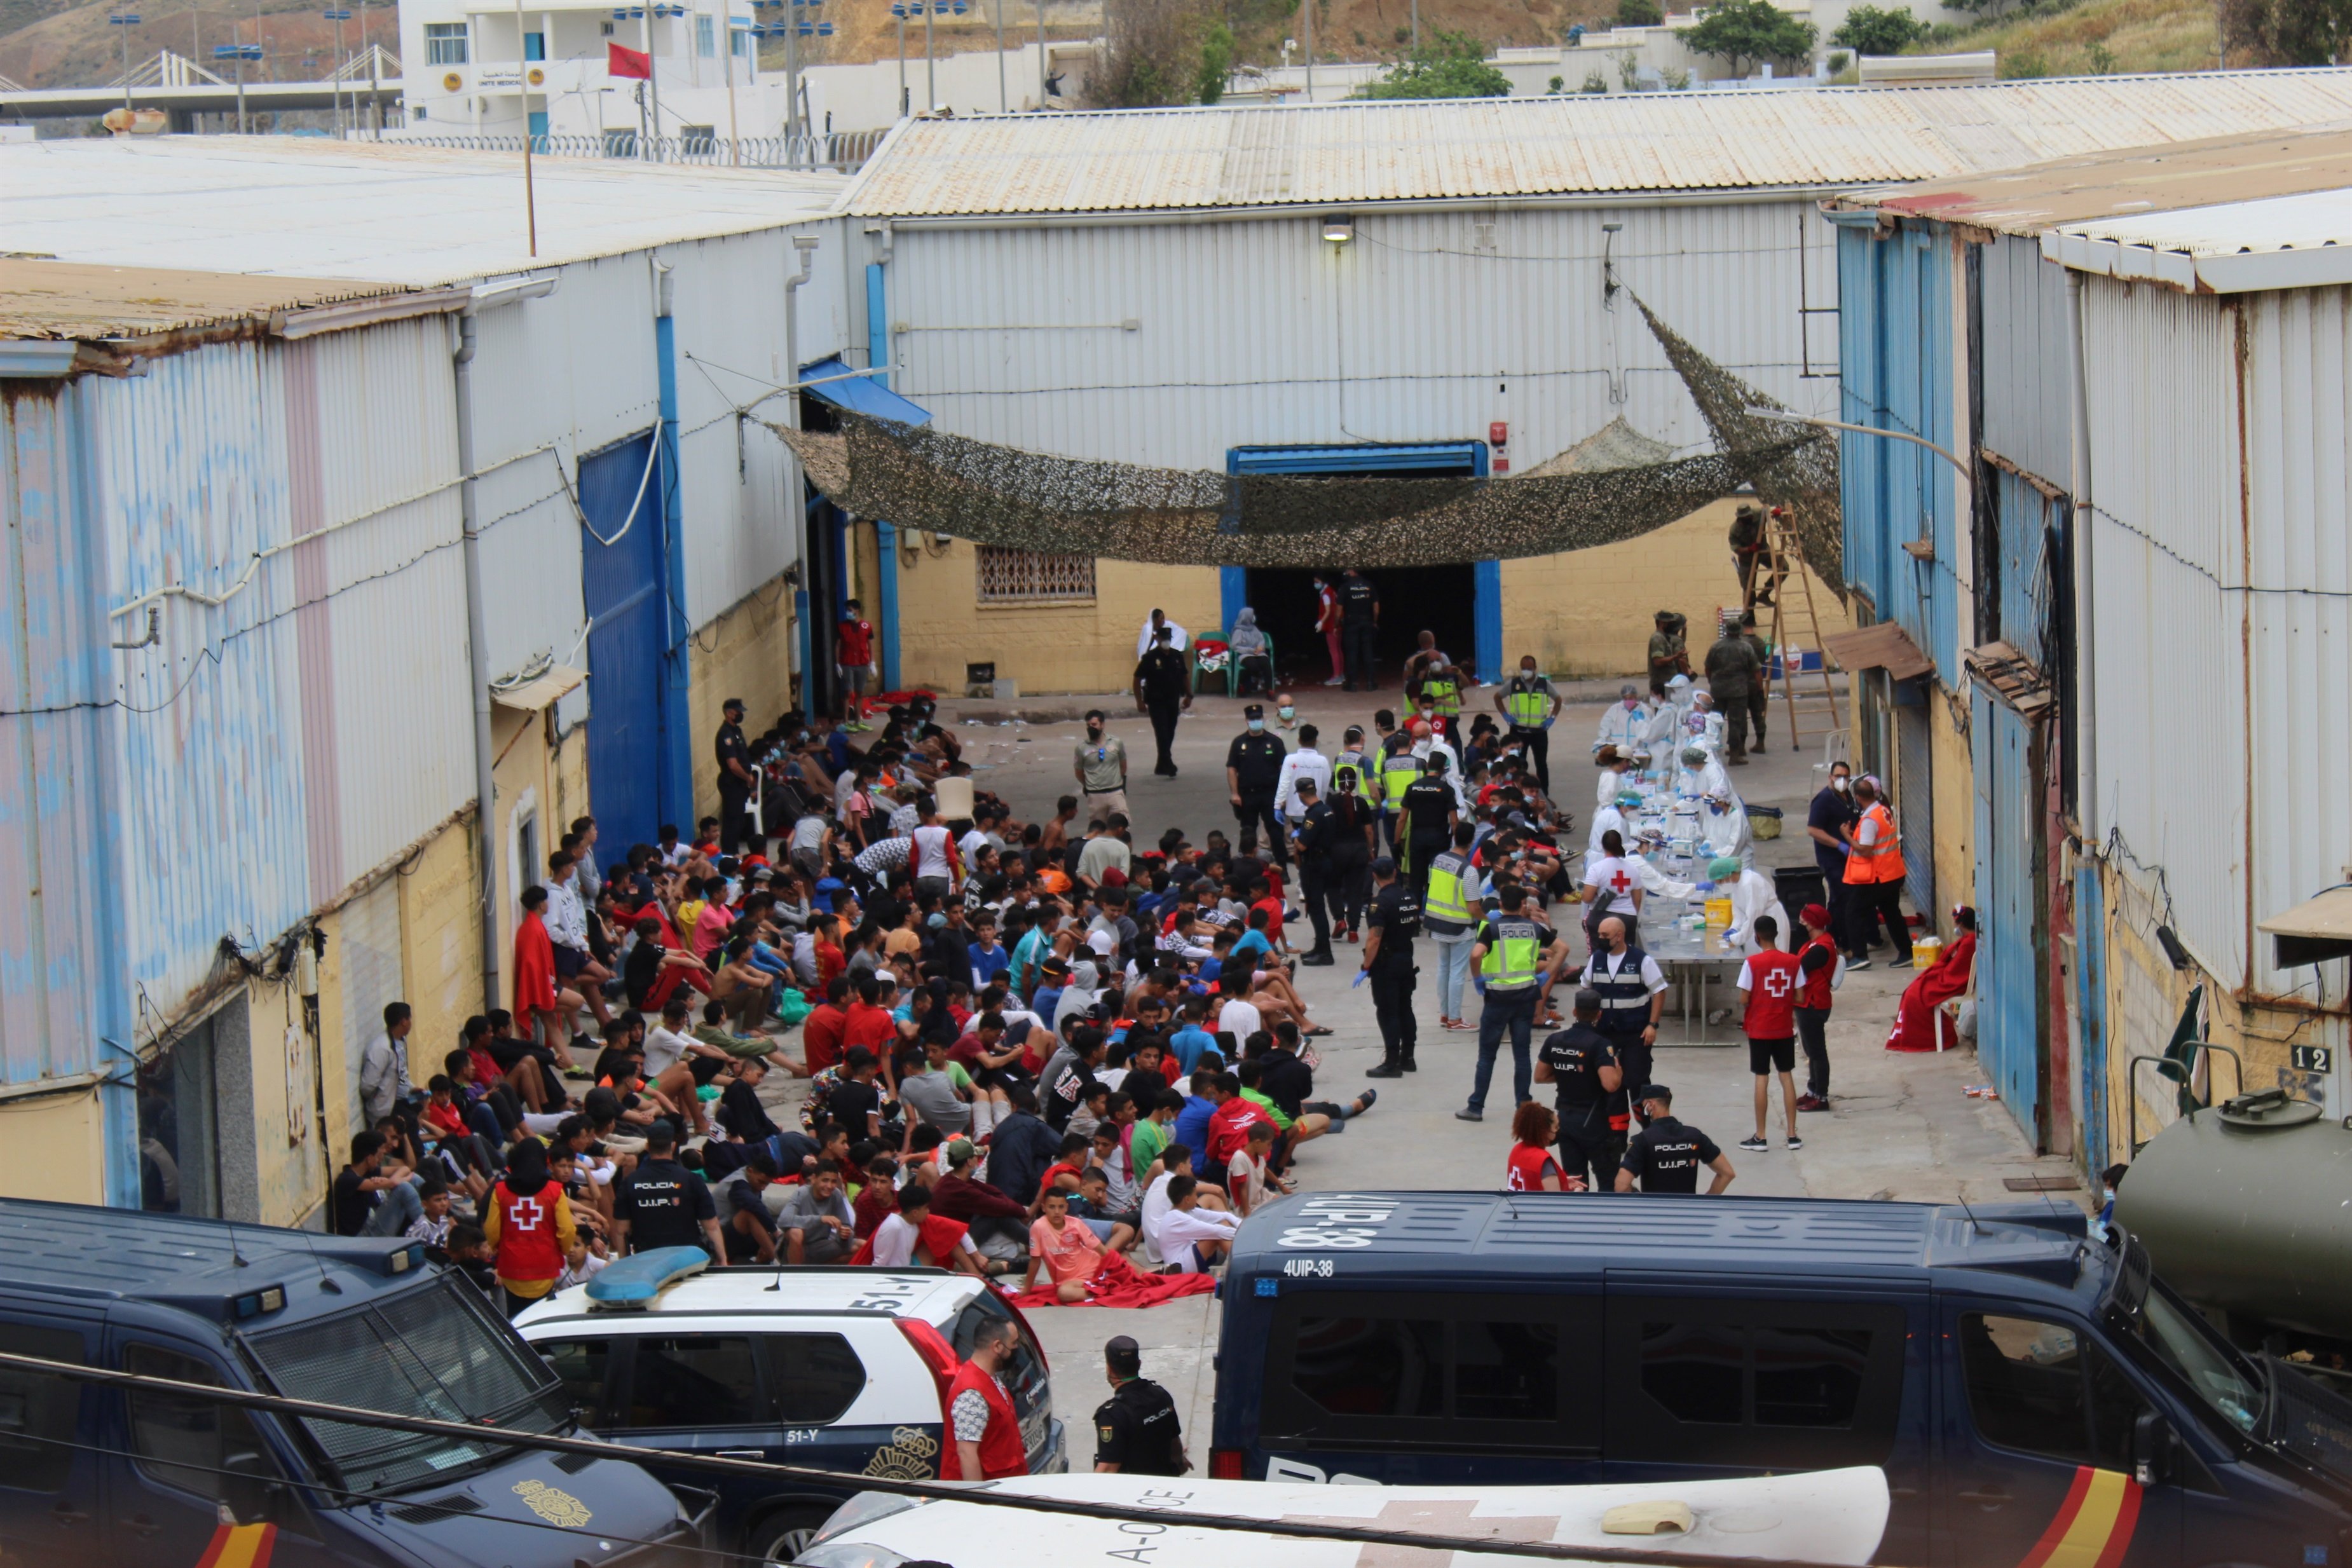 UN rapporteur: "Serious concerns" over Spain's 'hot returns' of migrants in Ceuta